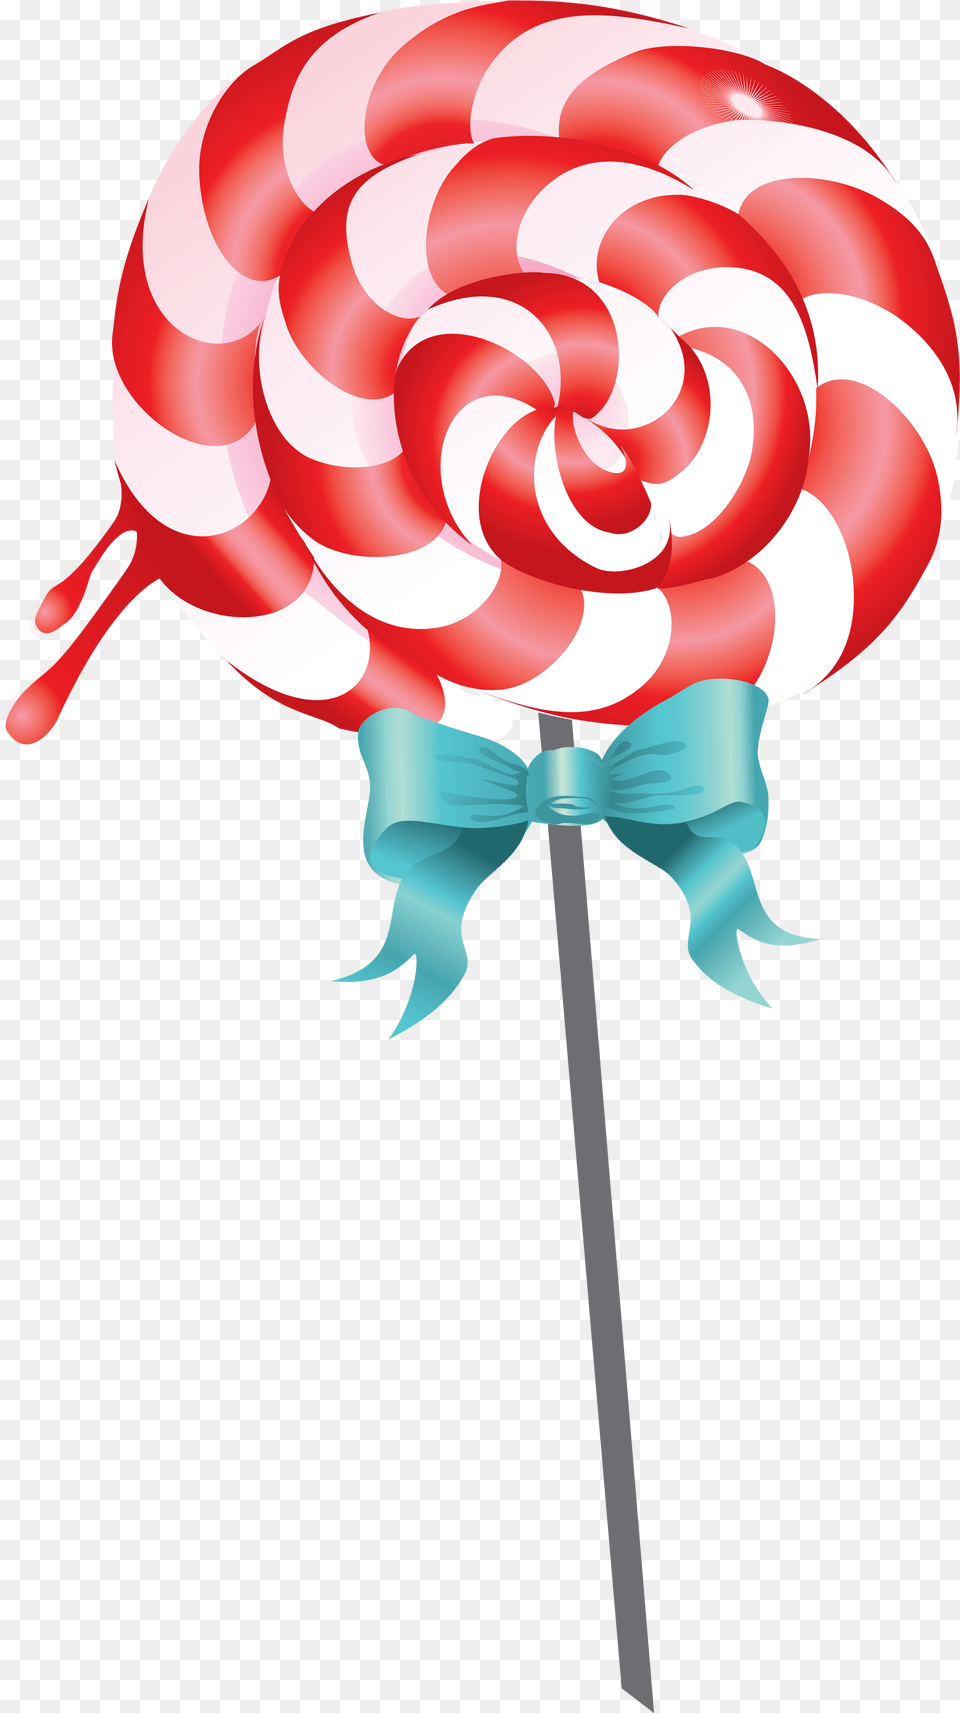 Lollipop Transparent Image Lollipop Background, Candy, Food, Sweets, Dynamite Free Png Download